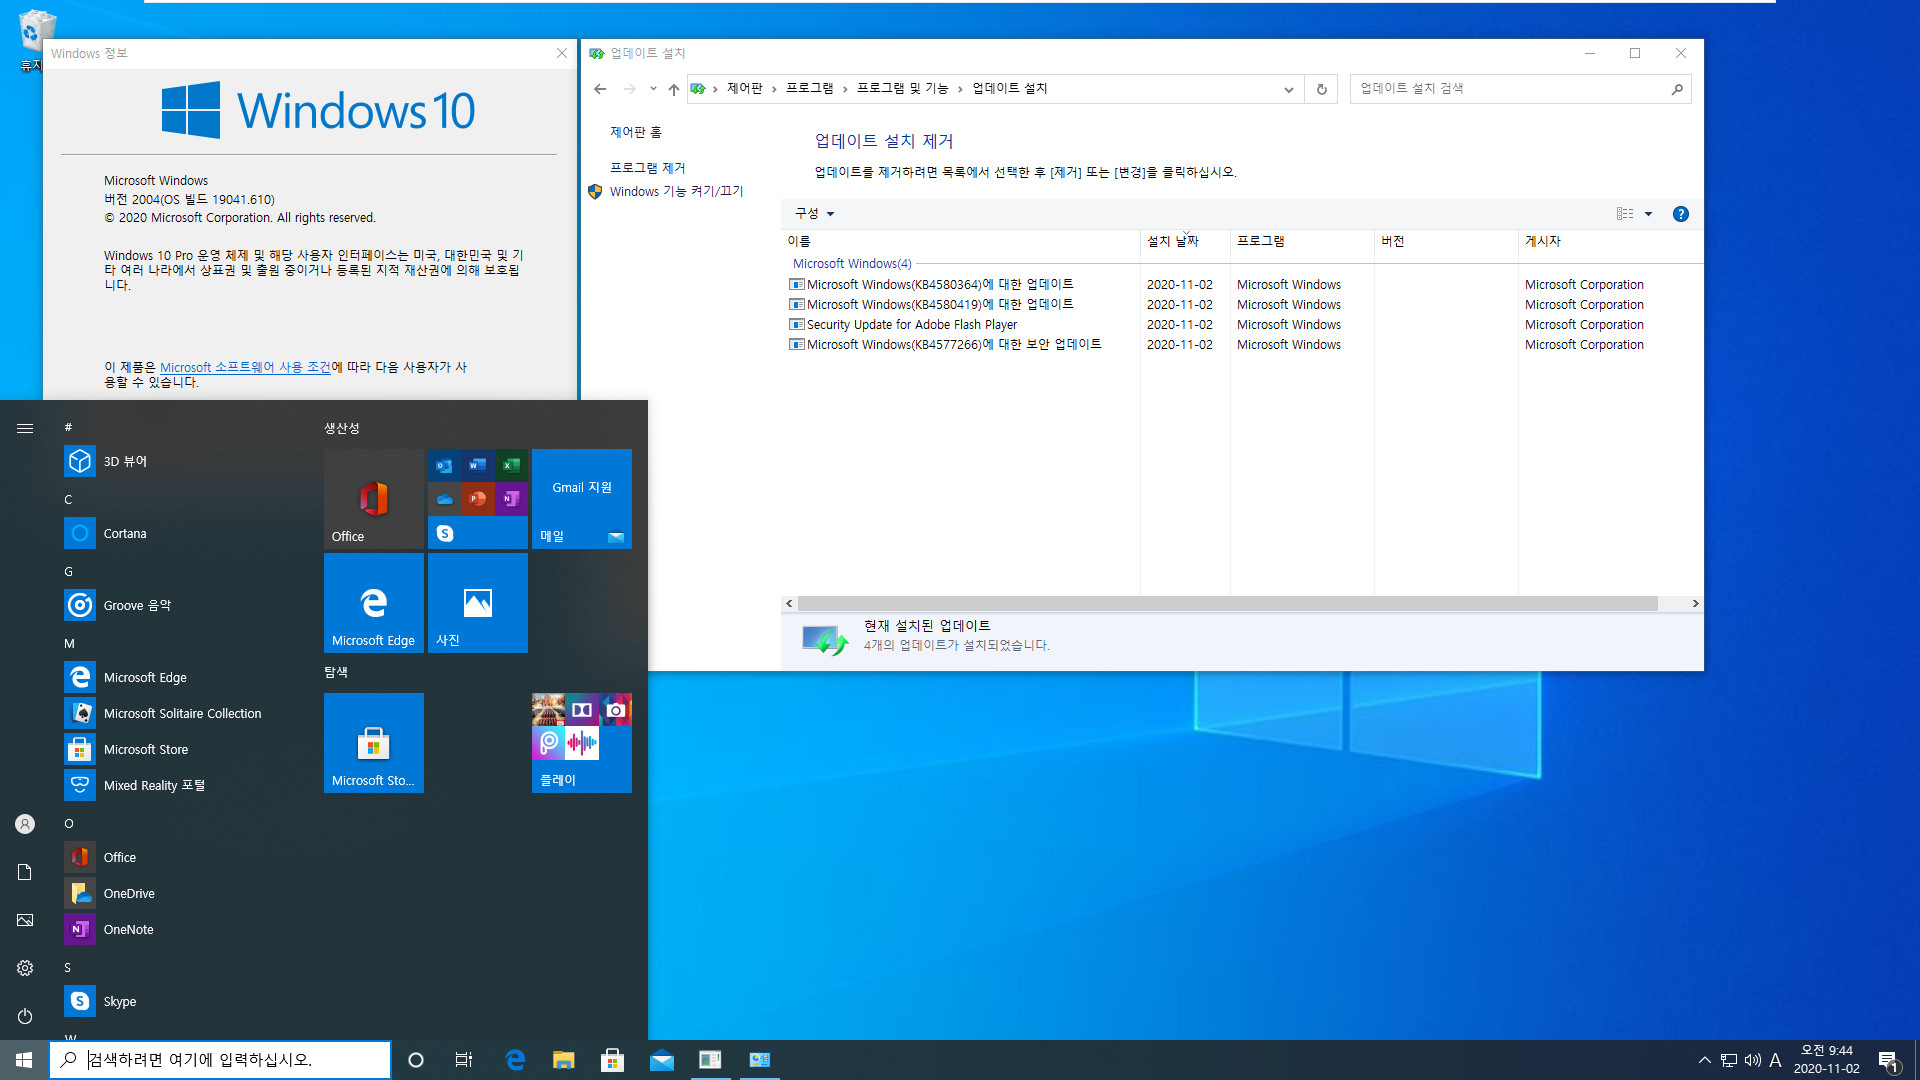 Windows 10 버전 20H2 기능 업데이트 KB4562830 폴더의 mum 파일들만 찾아서 설치하기.bat - 크로미엄 엣지 설치하지 않고 버전 20H2만 설치하기 테스트 2020-11-02_094421.jpg